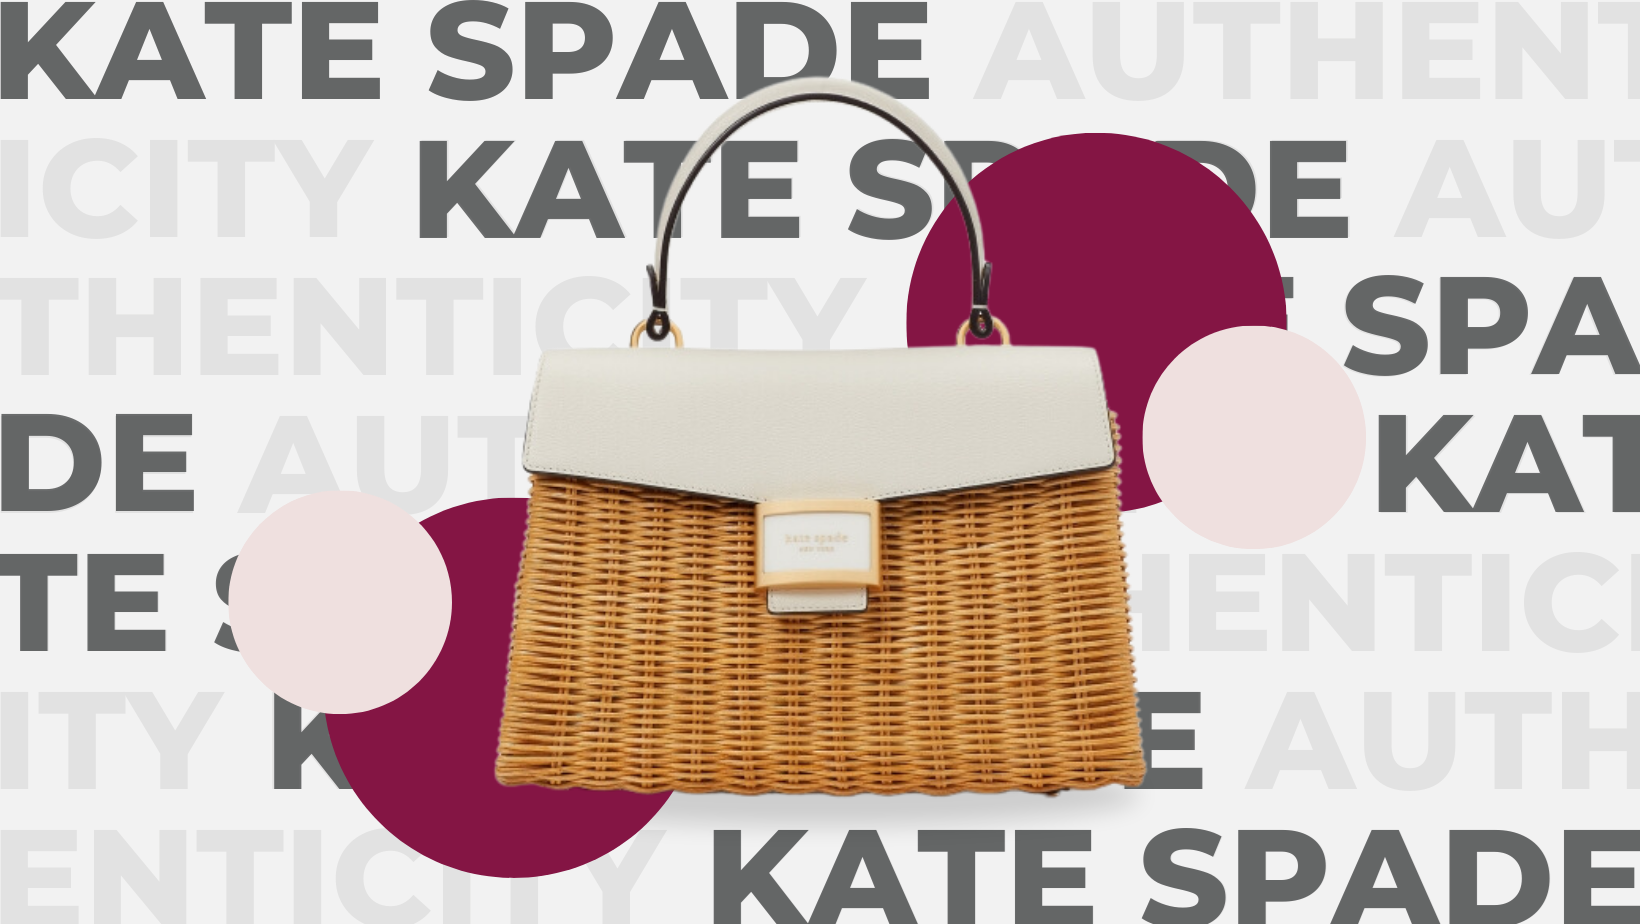 Is this Kate Spade bag real or fake?